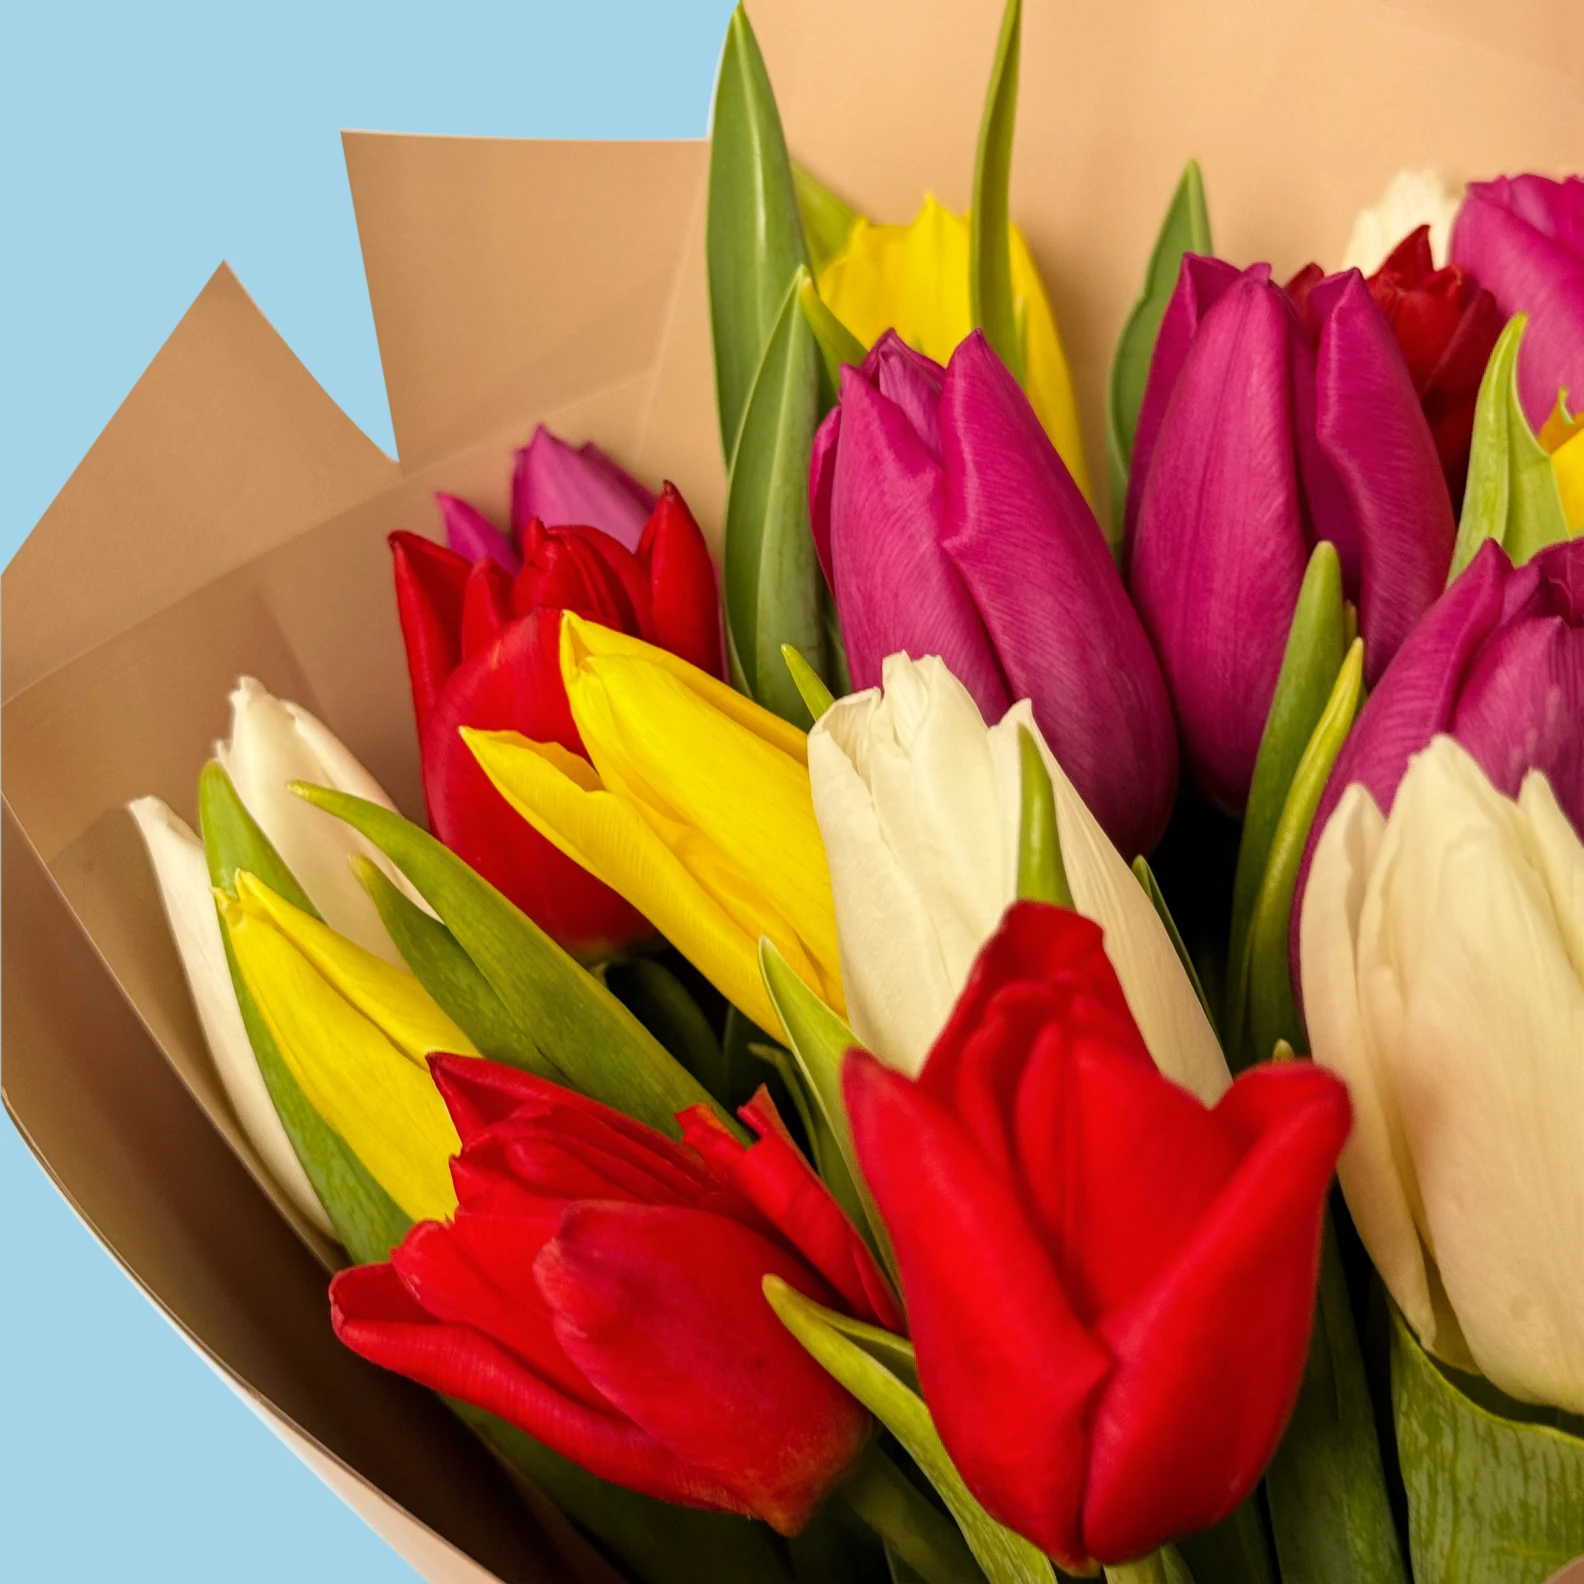 20 Mixed Tulips - image №3